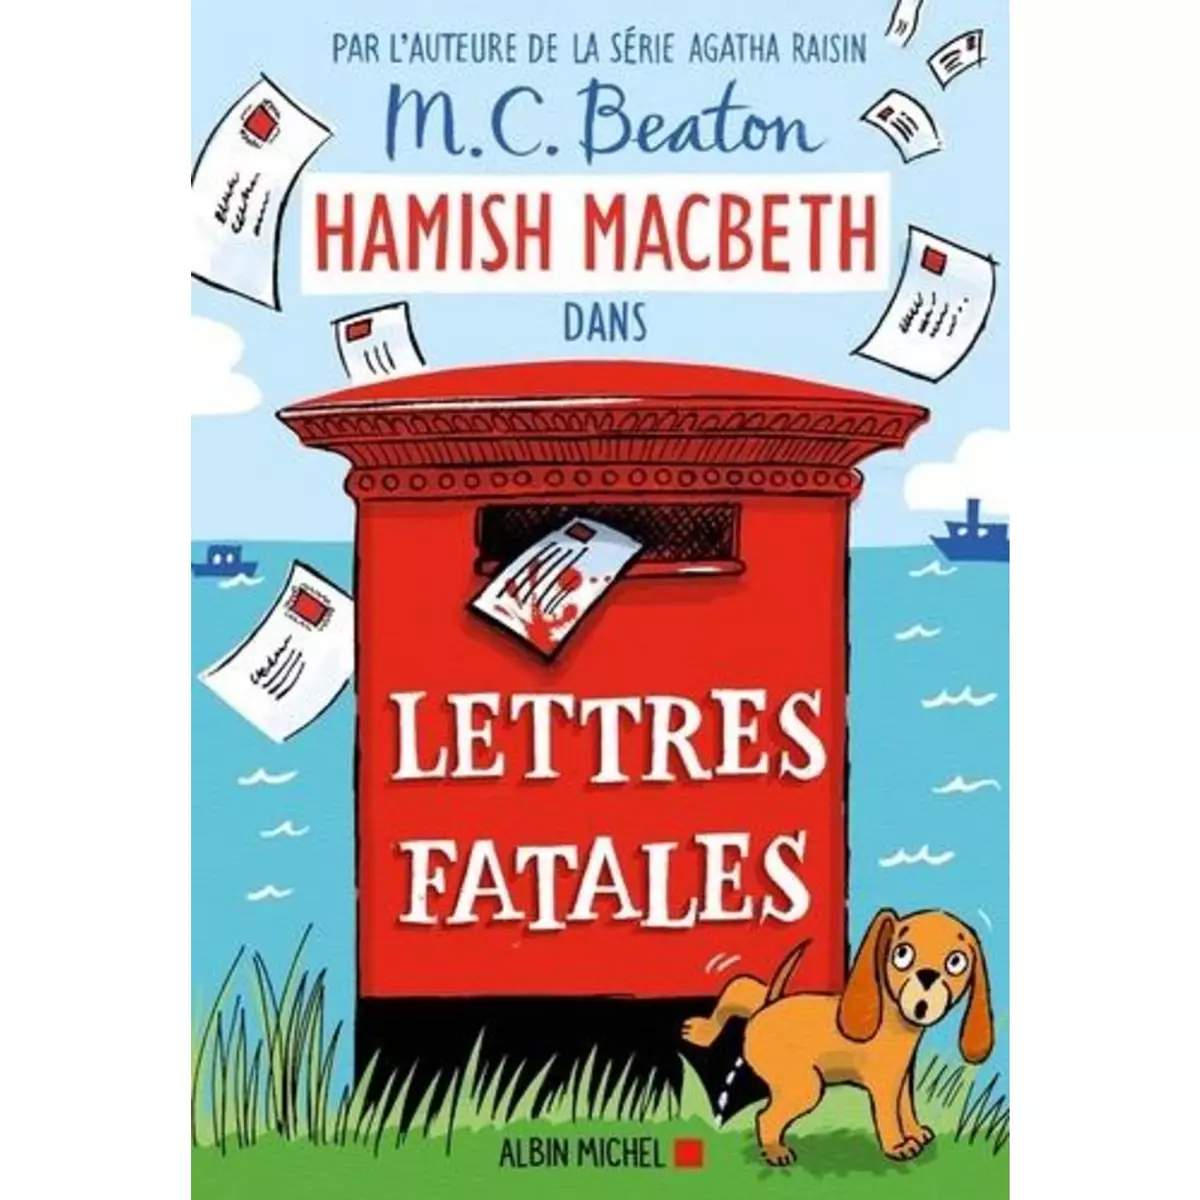  HAMISH MACBETH TOME 19 : LETTRES FATALES, Beaton M-C